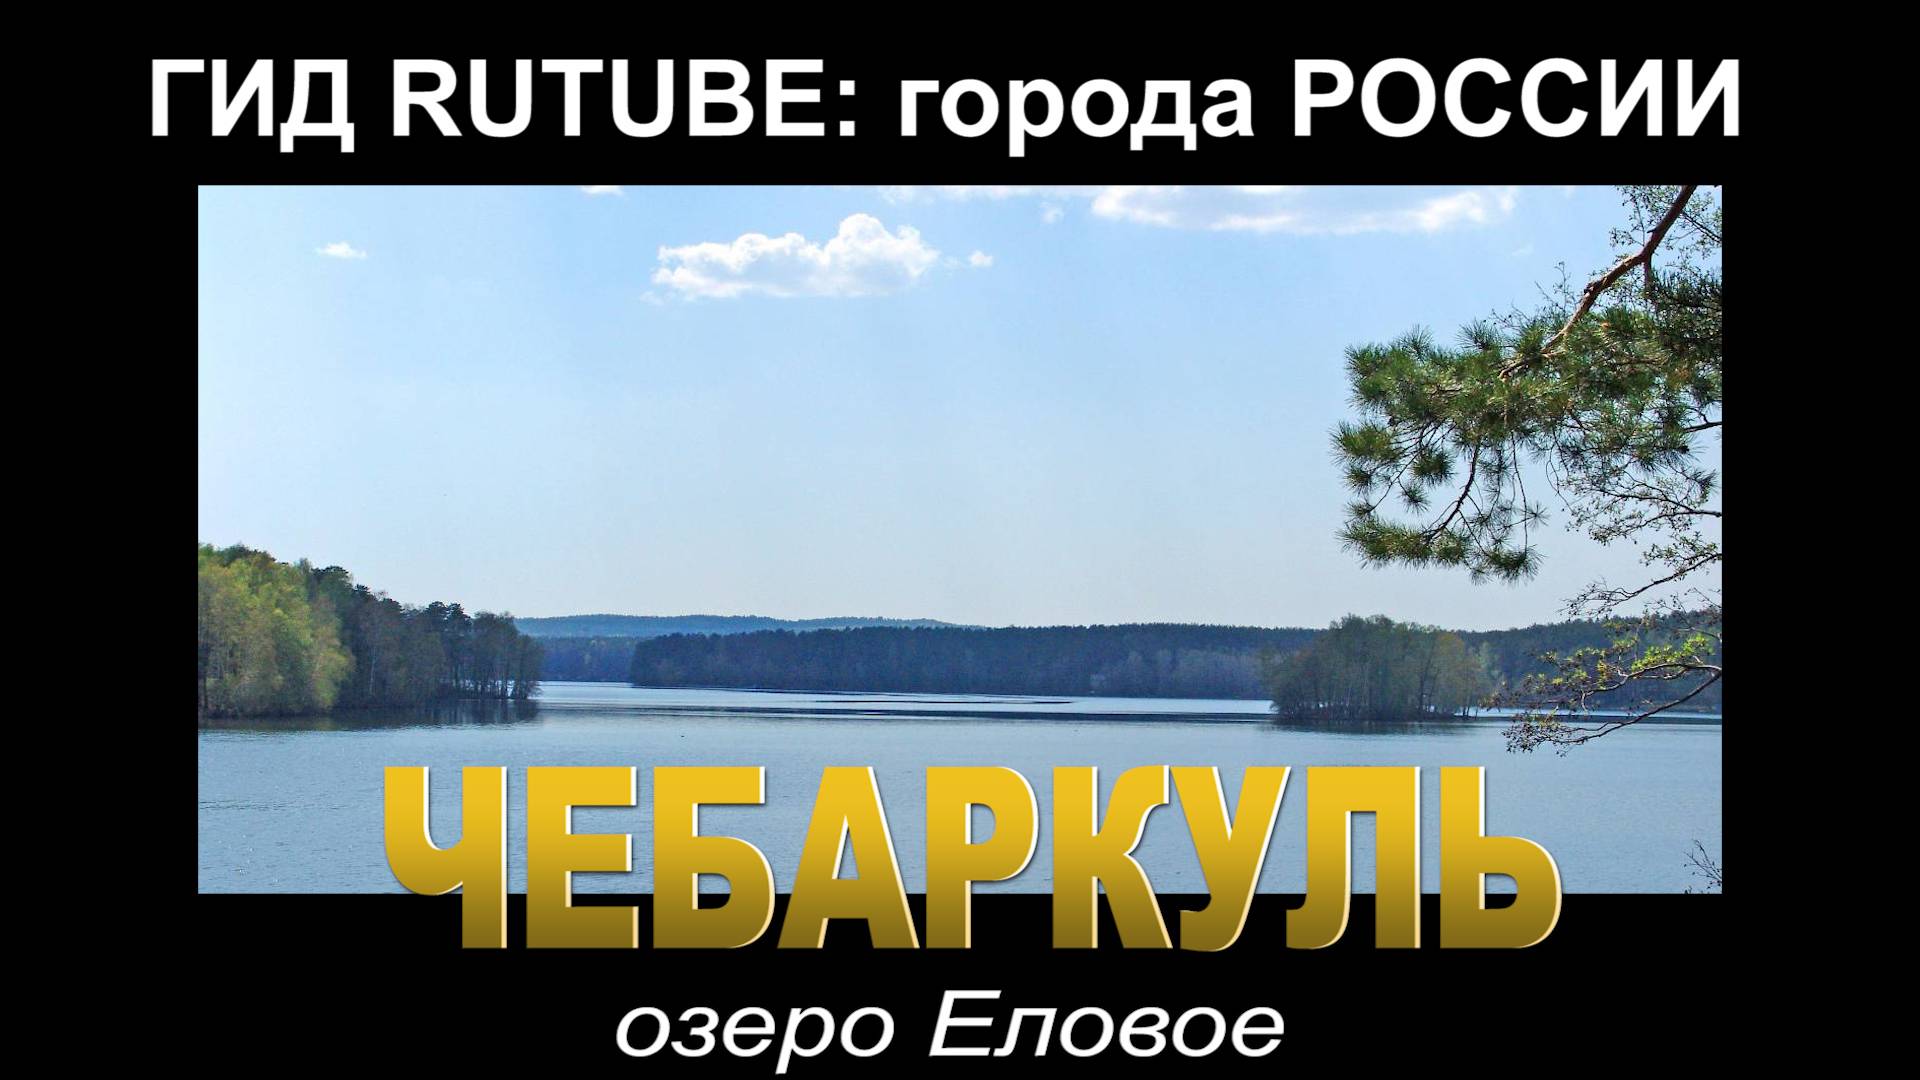 Чебаркуль. озеро Еловое ( Гид RUTUBE: города России